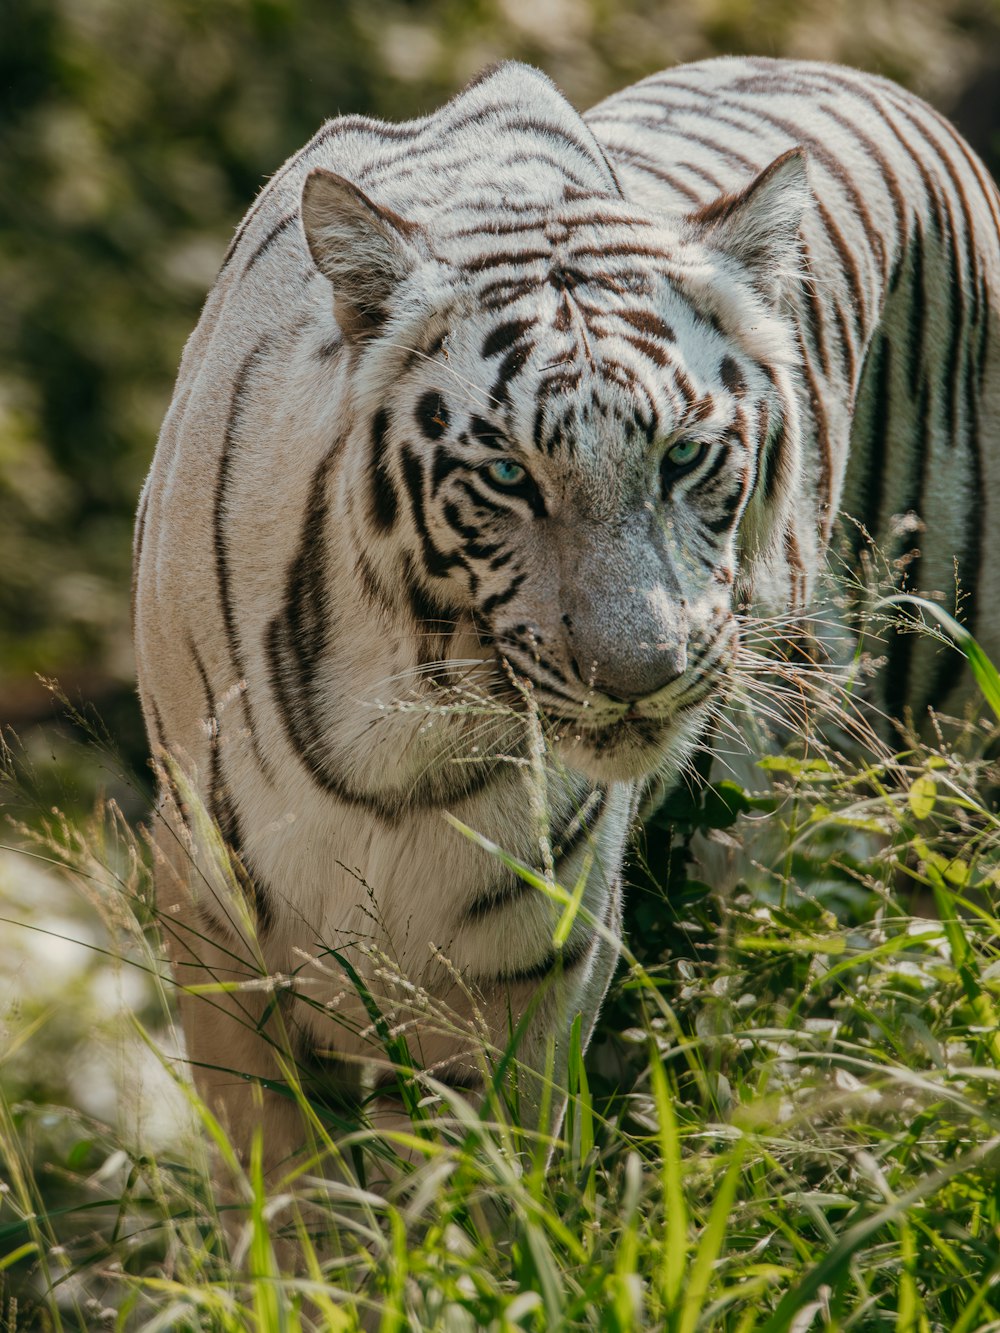 a white tiger walking through a lush green field